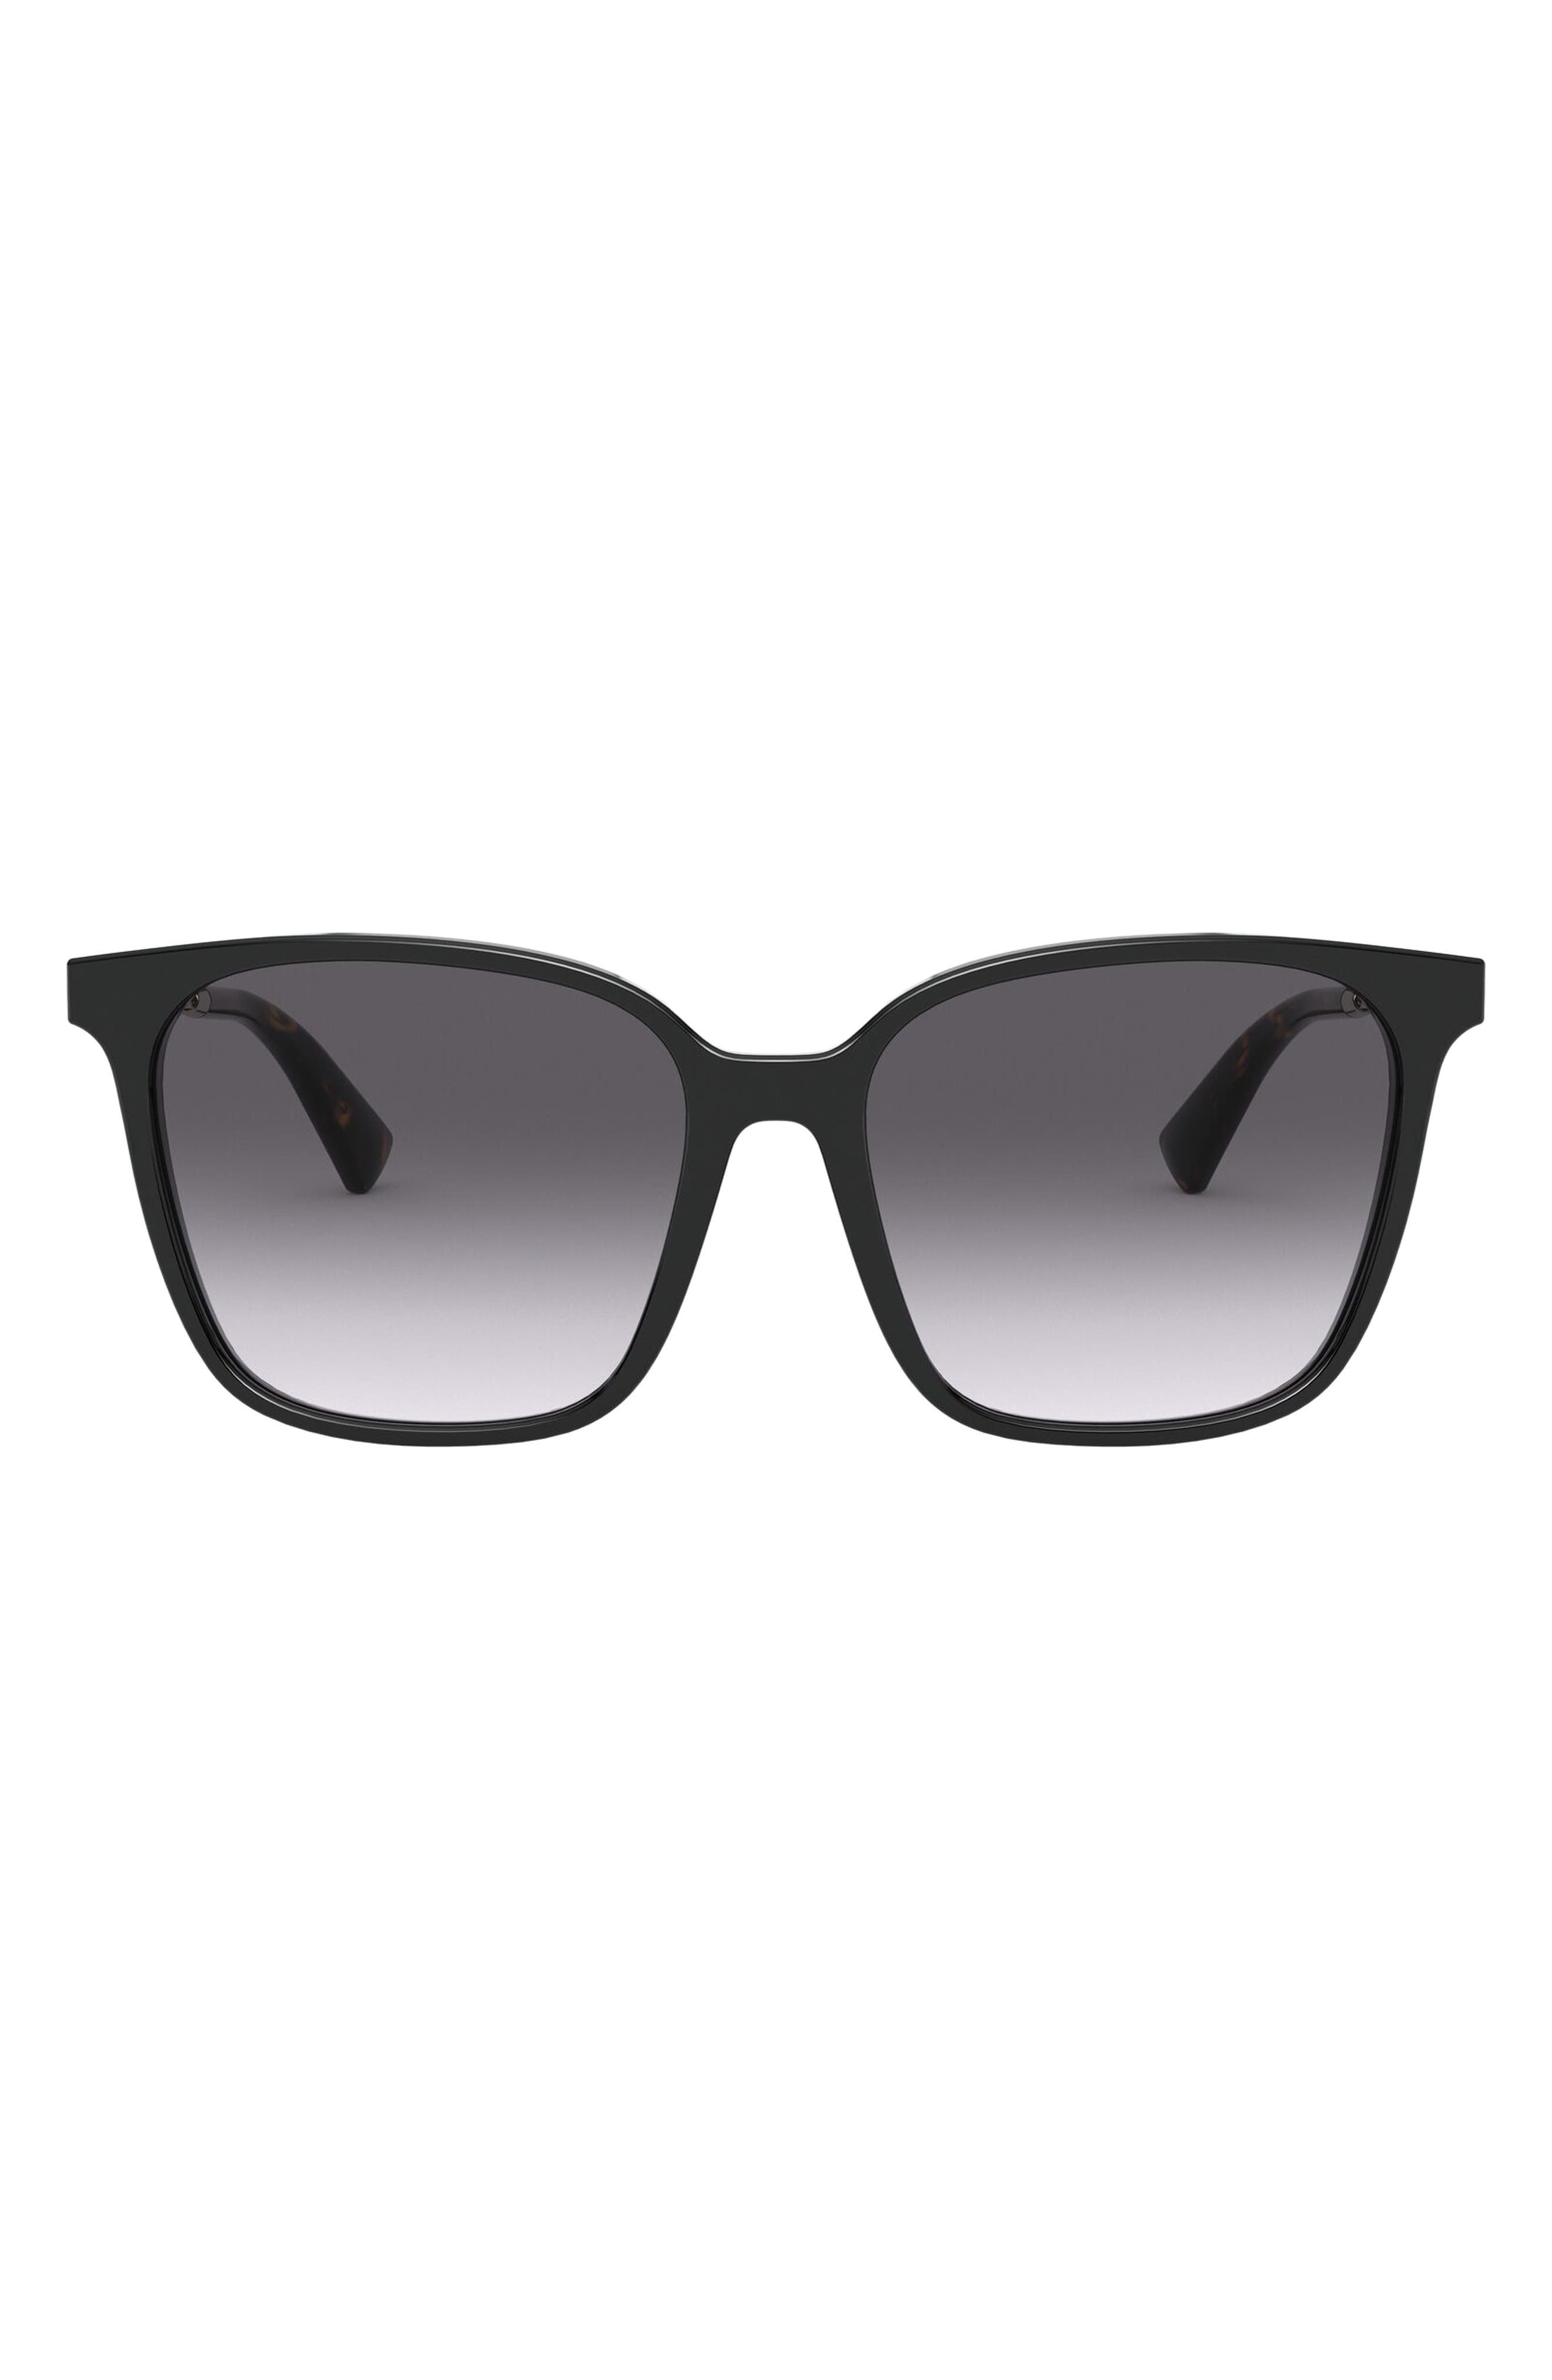 Valentino 57mm Gradient Square Sunglasses in Black/Black Gradient at Nordstrom